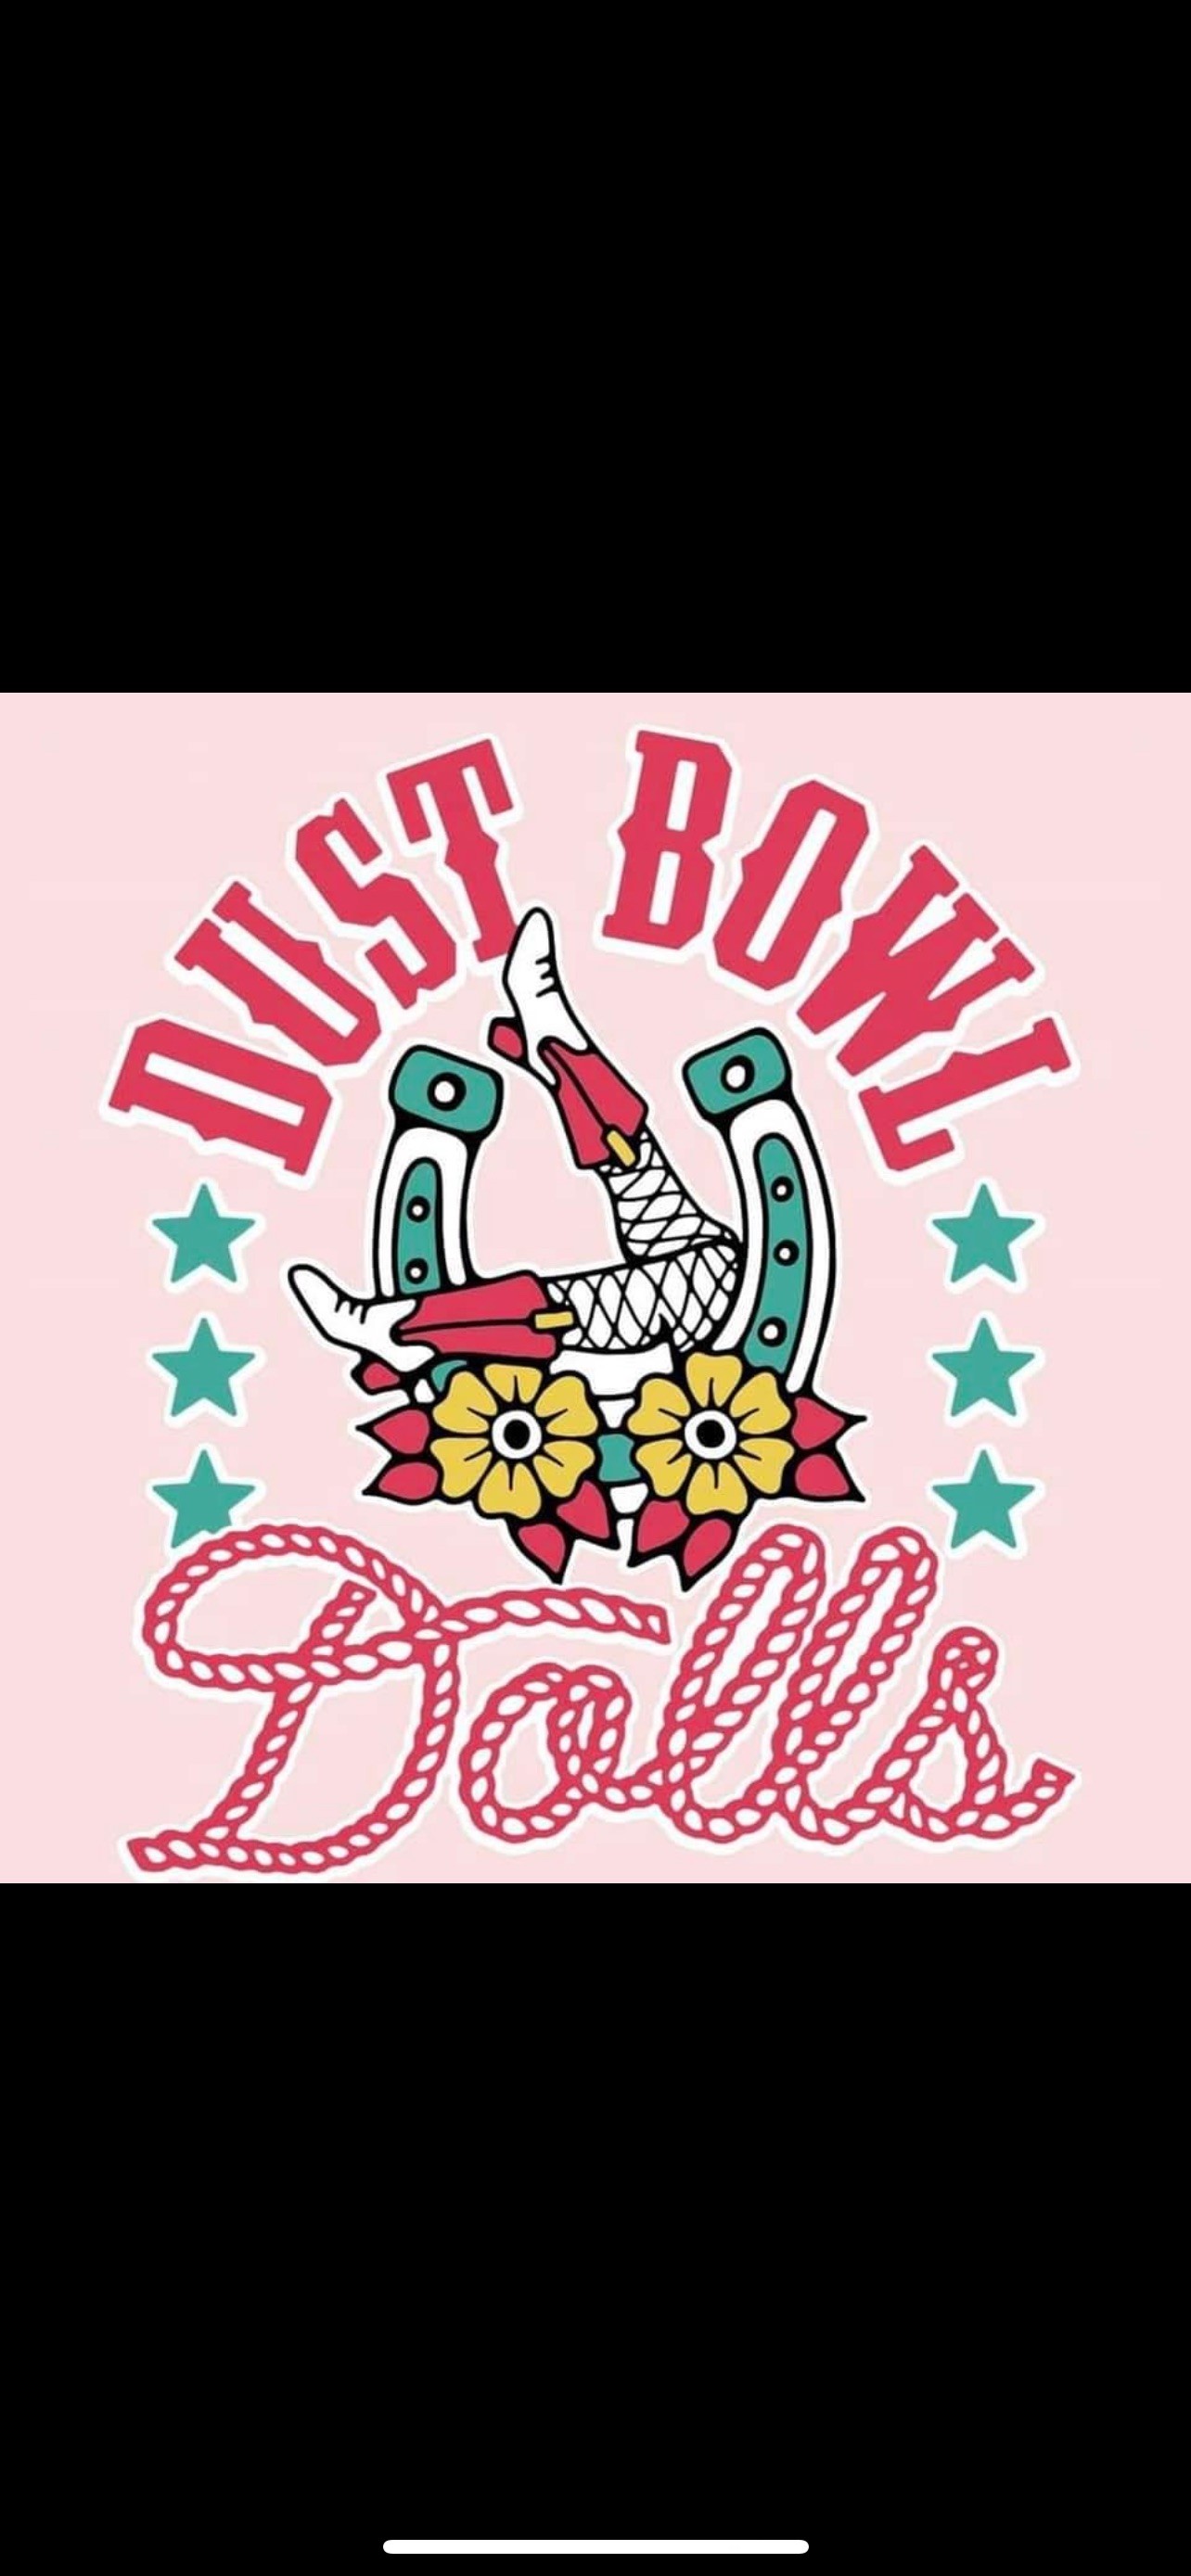 Dust Bowl Dolls Burlesque Show Live at RED  on juin 22, 21:00@Boondocks Tavern - Achetez des billets et obtenez des informations surBoondocks Tavern 